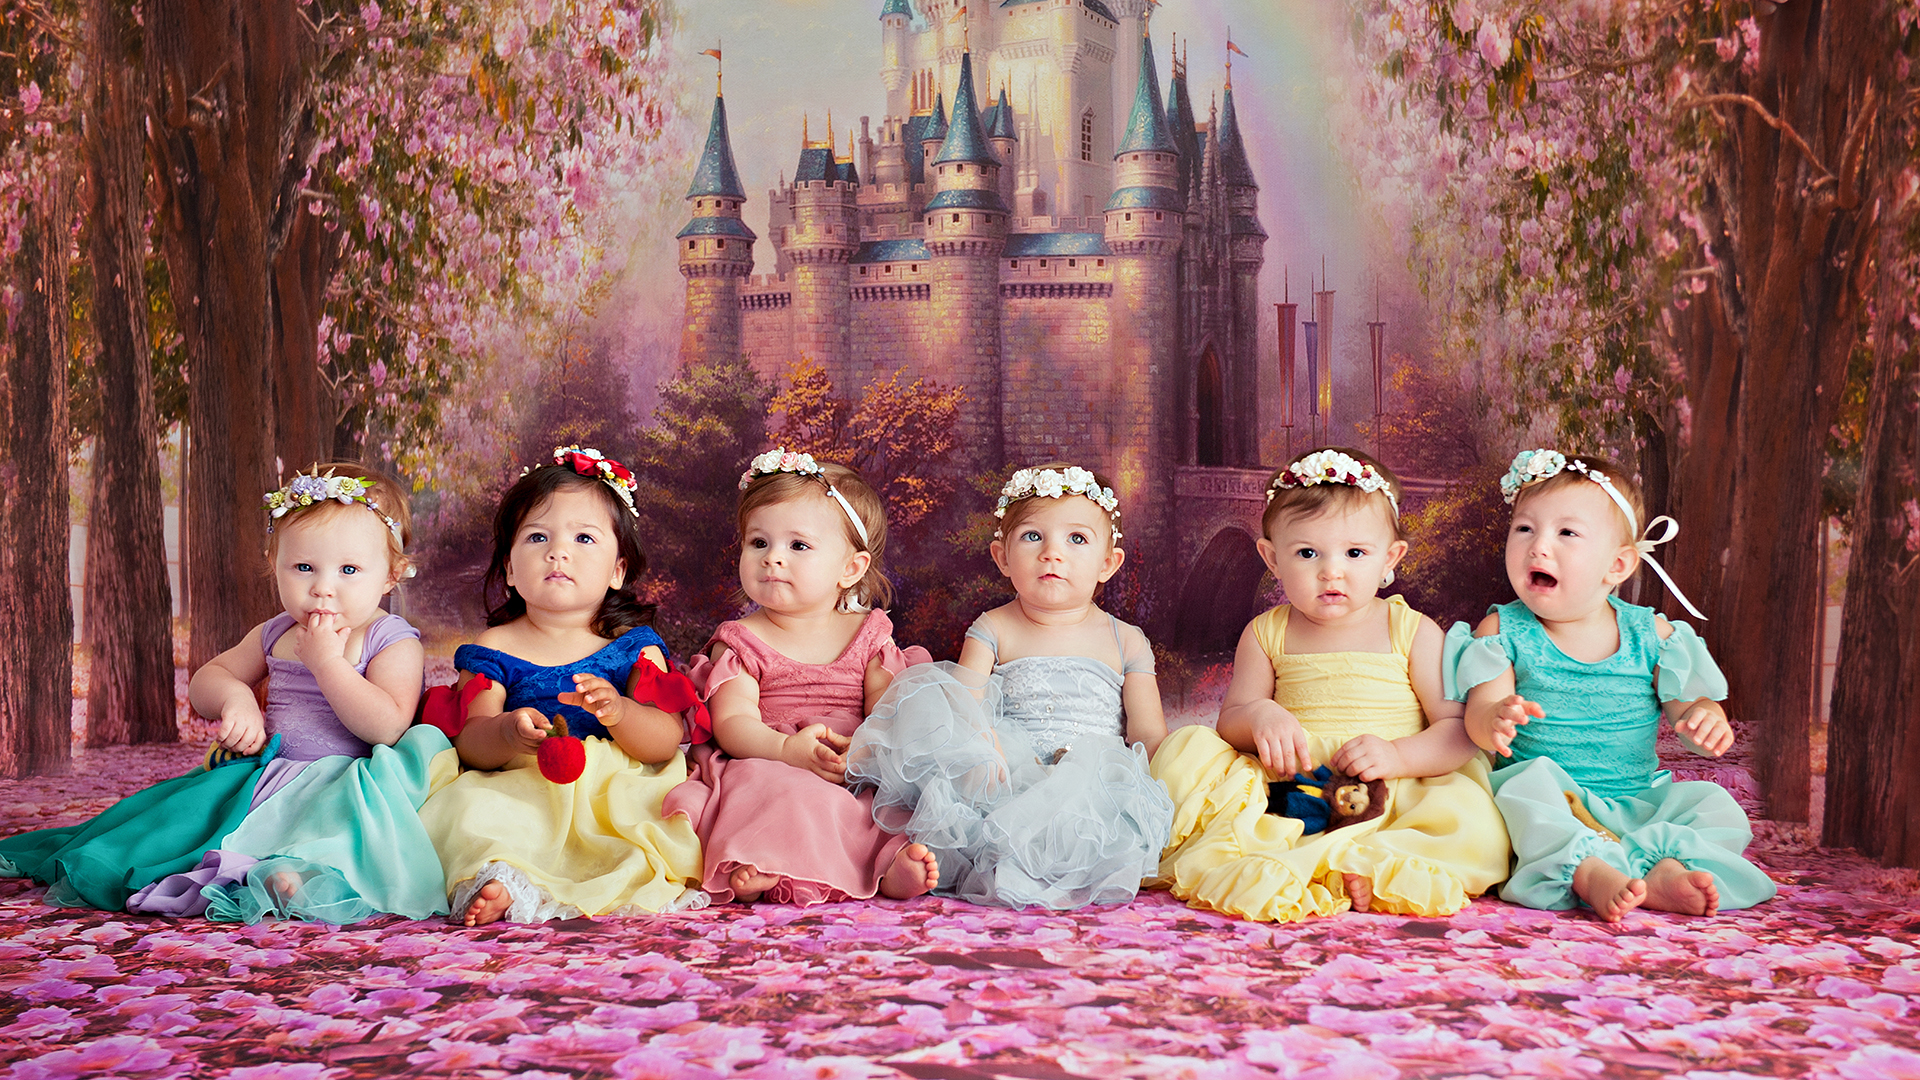 Disney princess newborns are photographed on first birthday